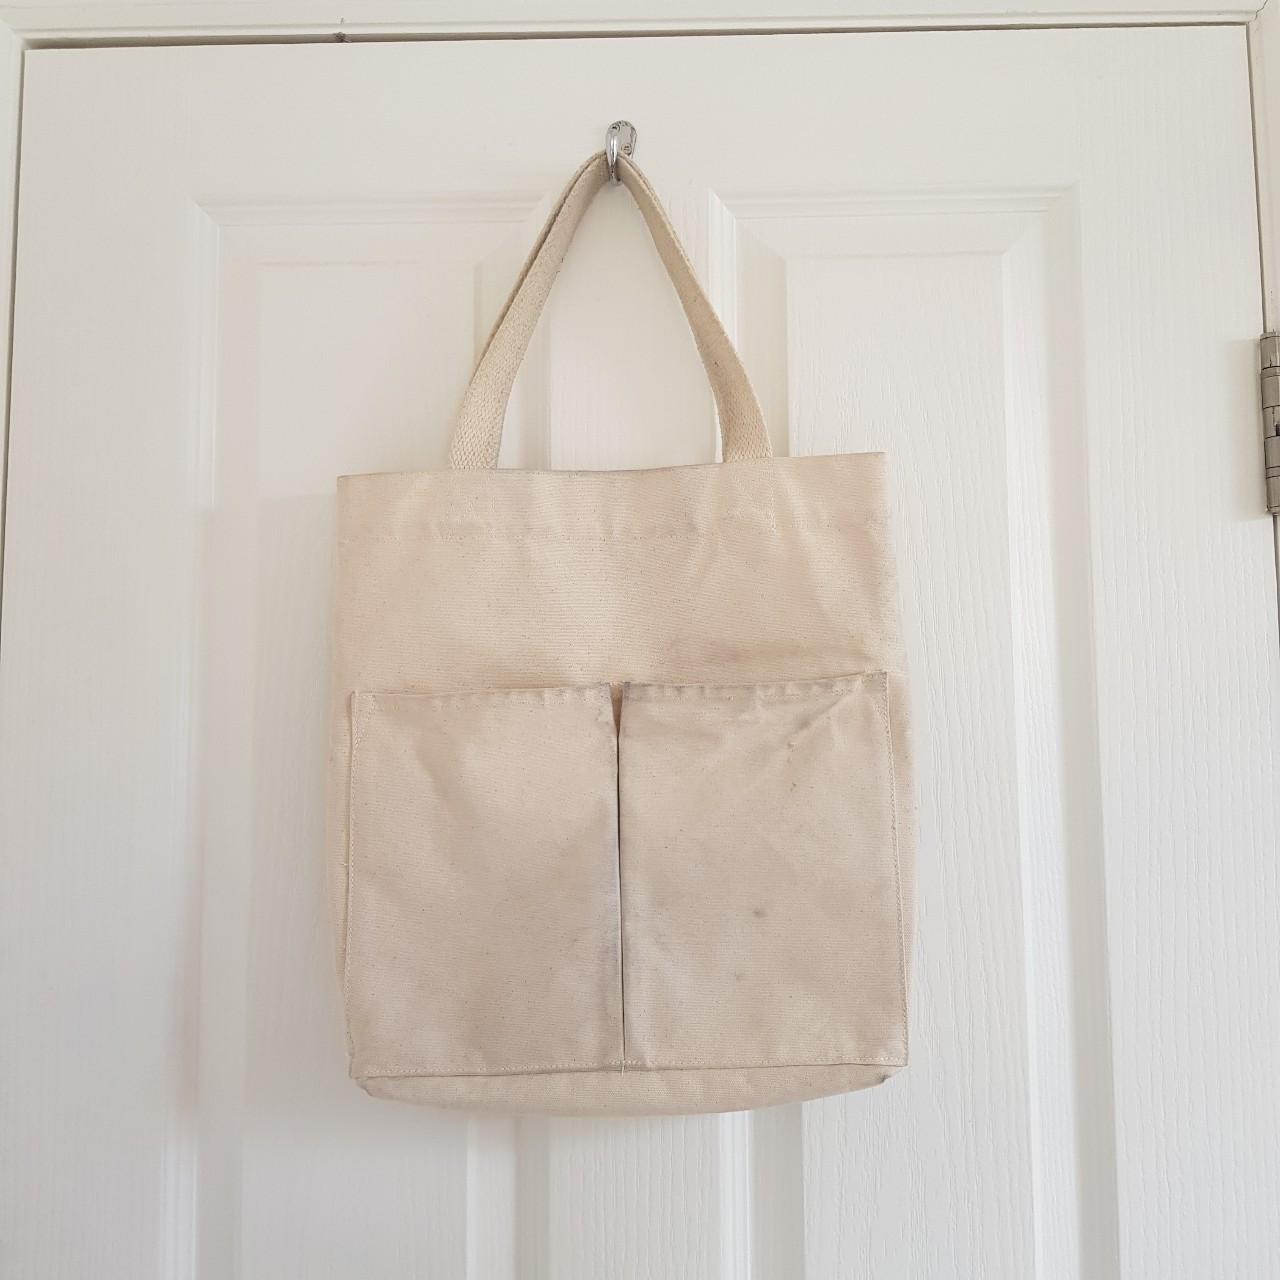 Product Image 1 - White/beige Muji Tote Bag. High